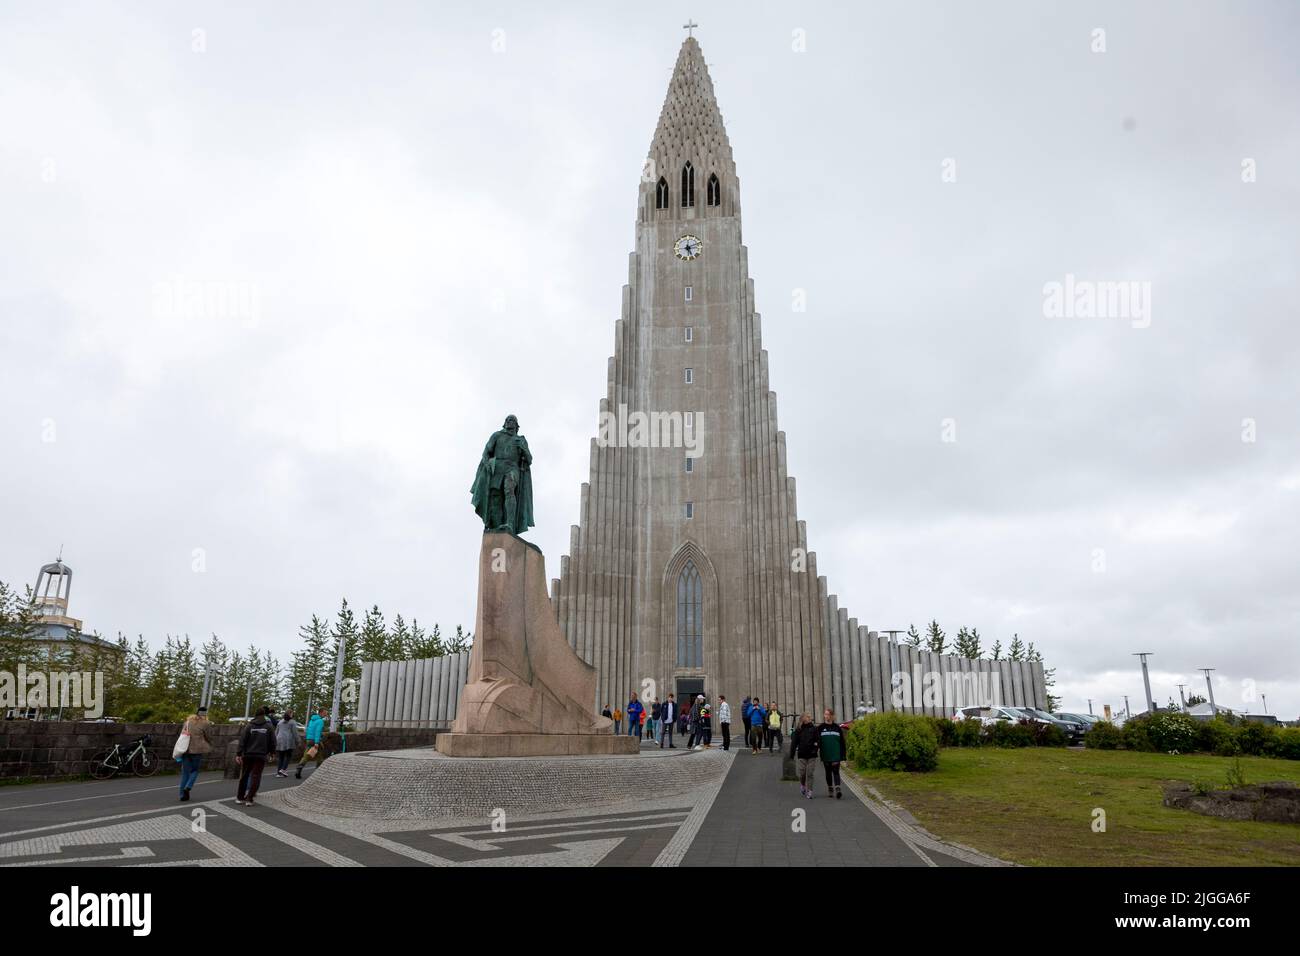 A general view of Hallgrímskirkja, Church of Iceland, in Reykjavík, Iceland.  Image shot on 10th July 2022.  © Belinda Jiao   jiao.bilin@gmail.com 075 Stock Photo